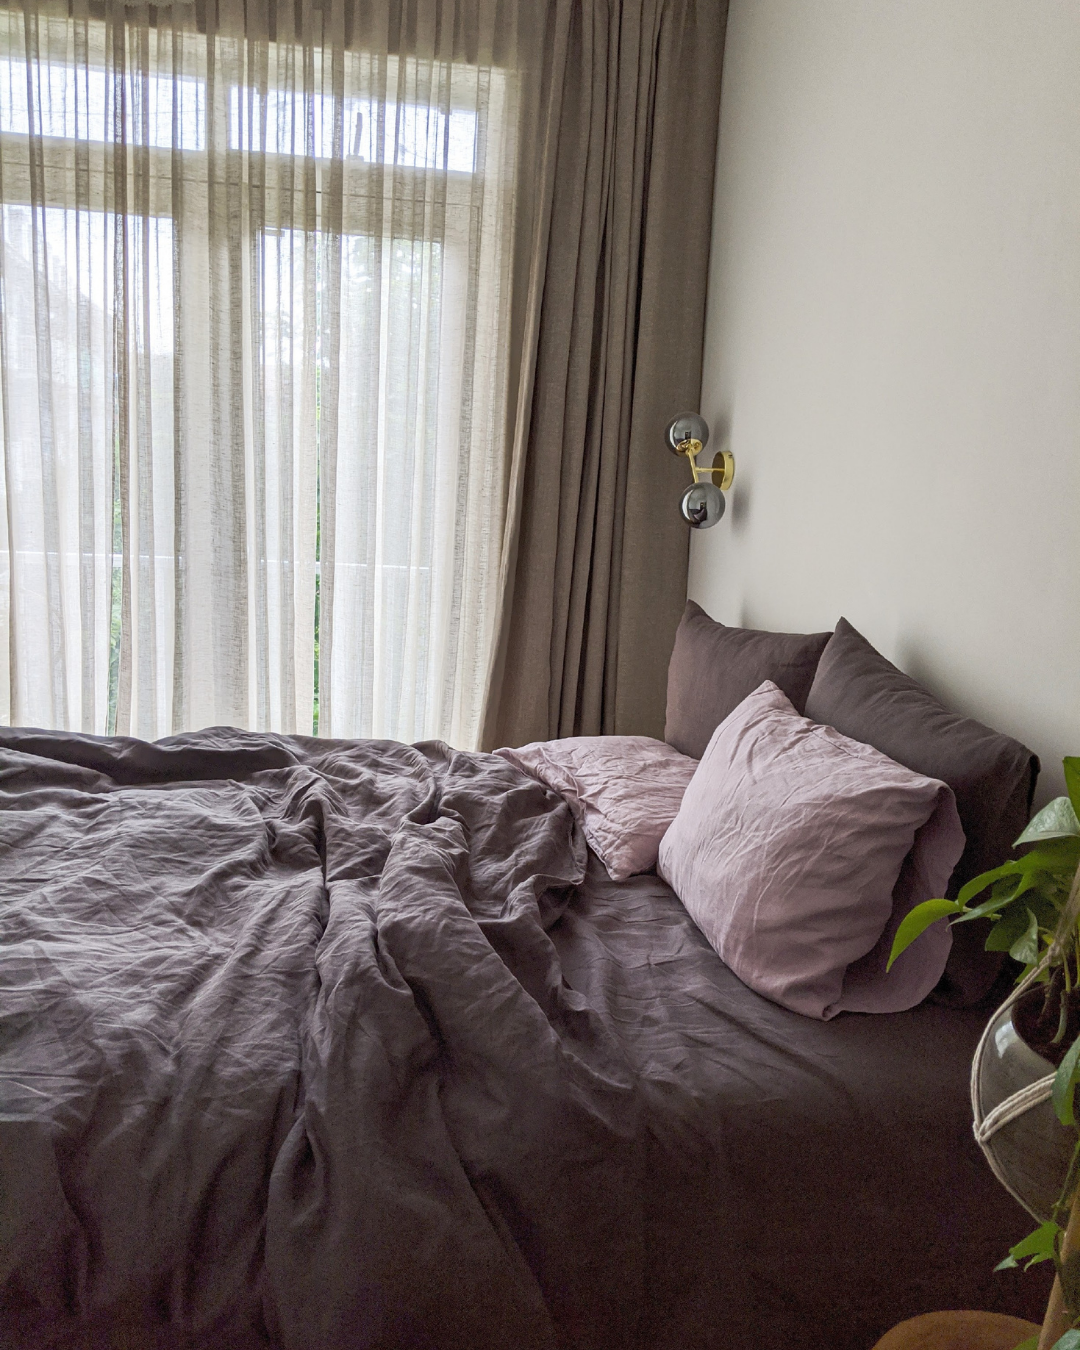 Graphite bedding from soft linen